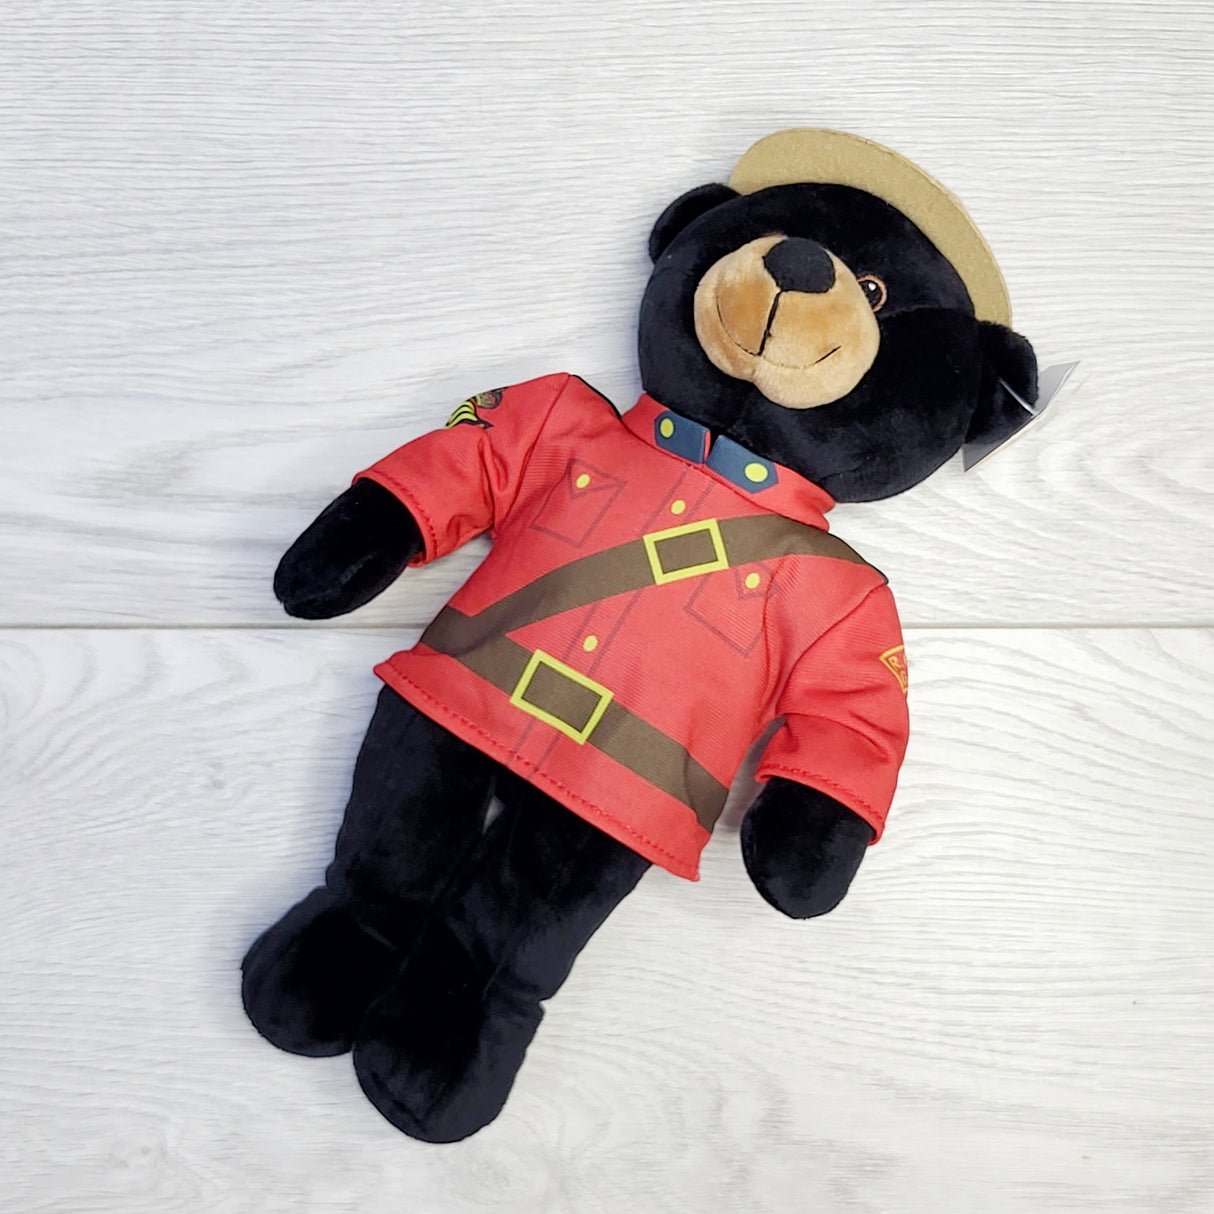 MIRE2 - NEW - RCMP plush 11 inch bear